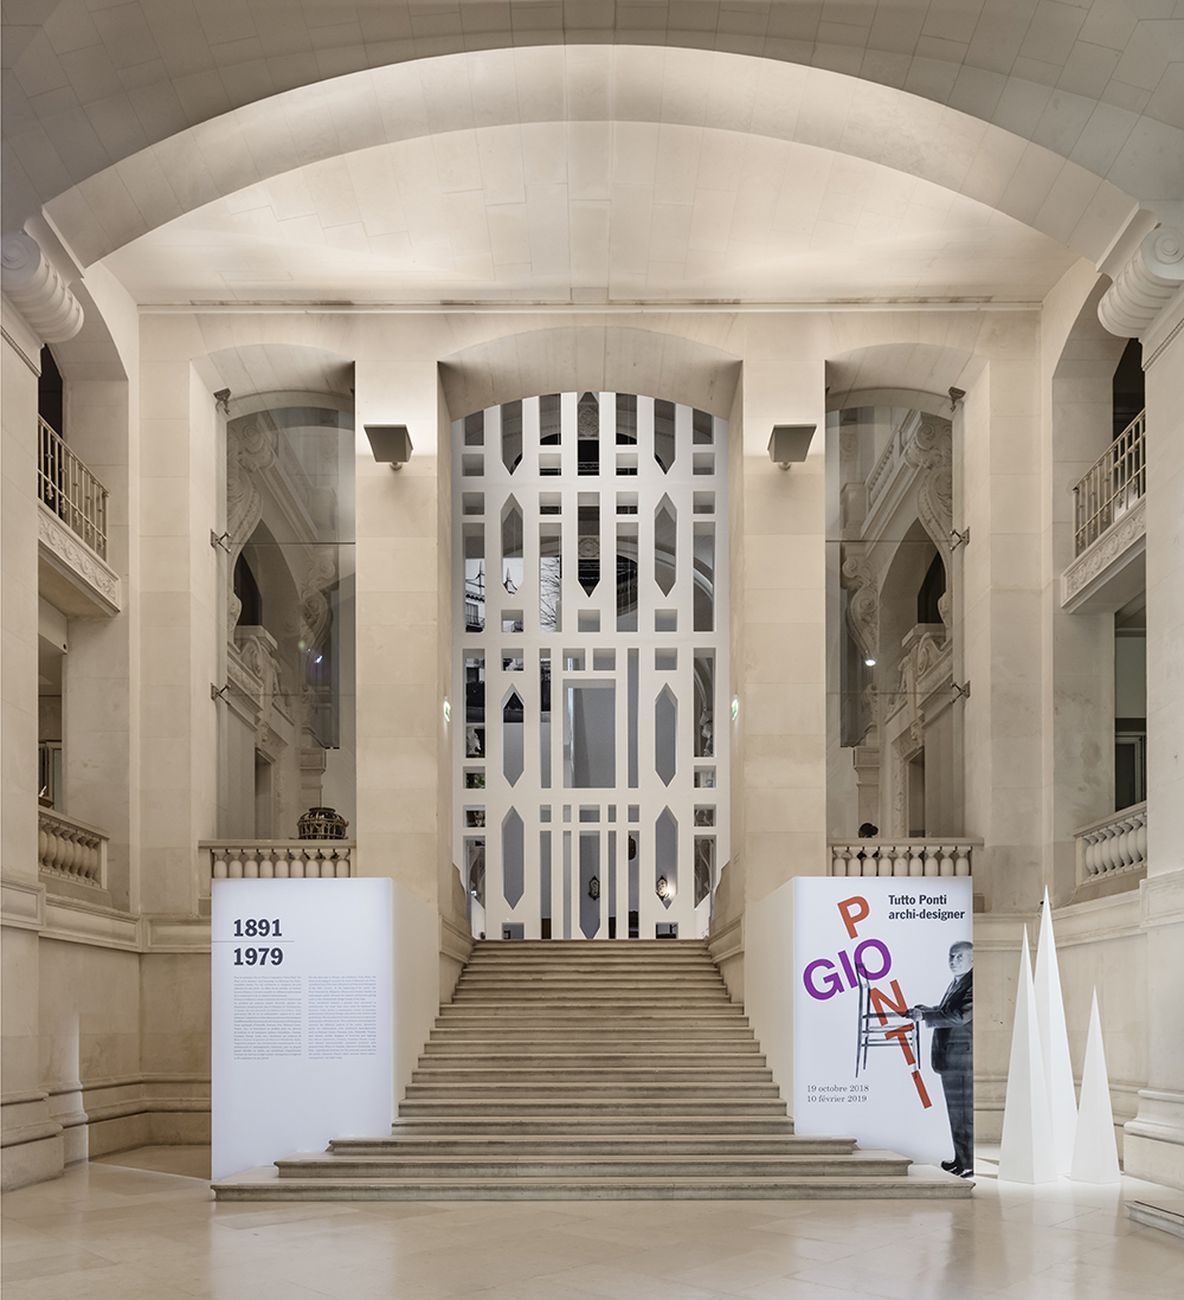 Tutto Ponti. Gio Ponti Archi-Designer. MAD – Musée des Arts Décoratifs, Parigi 2018. Photo © Luc Boegly